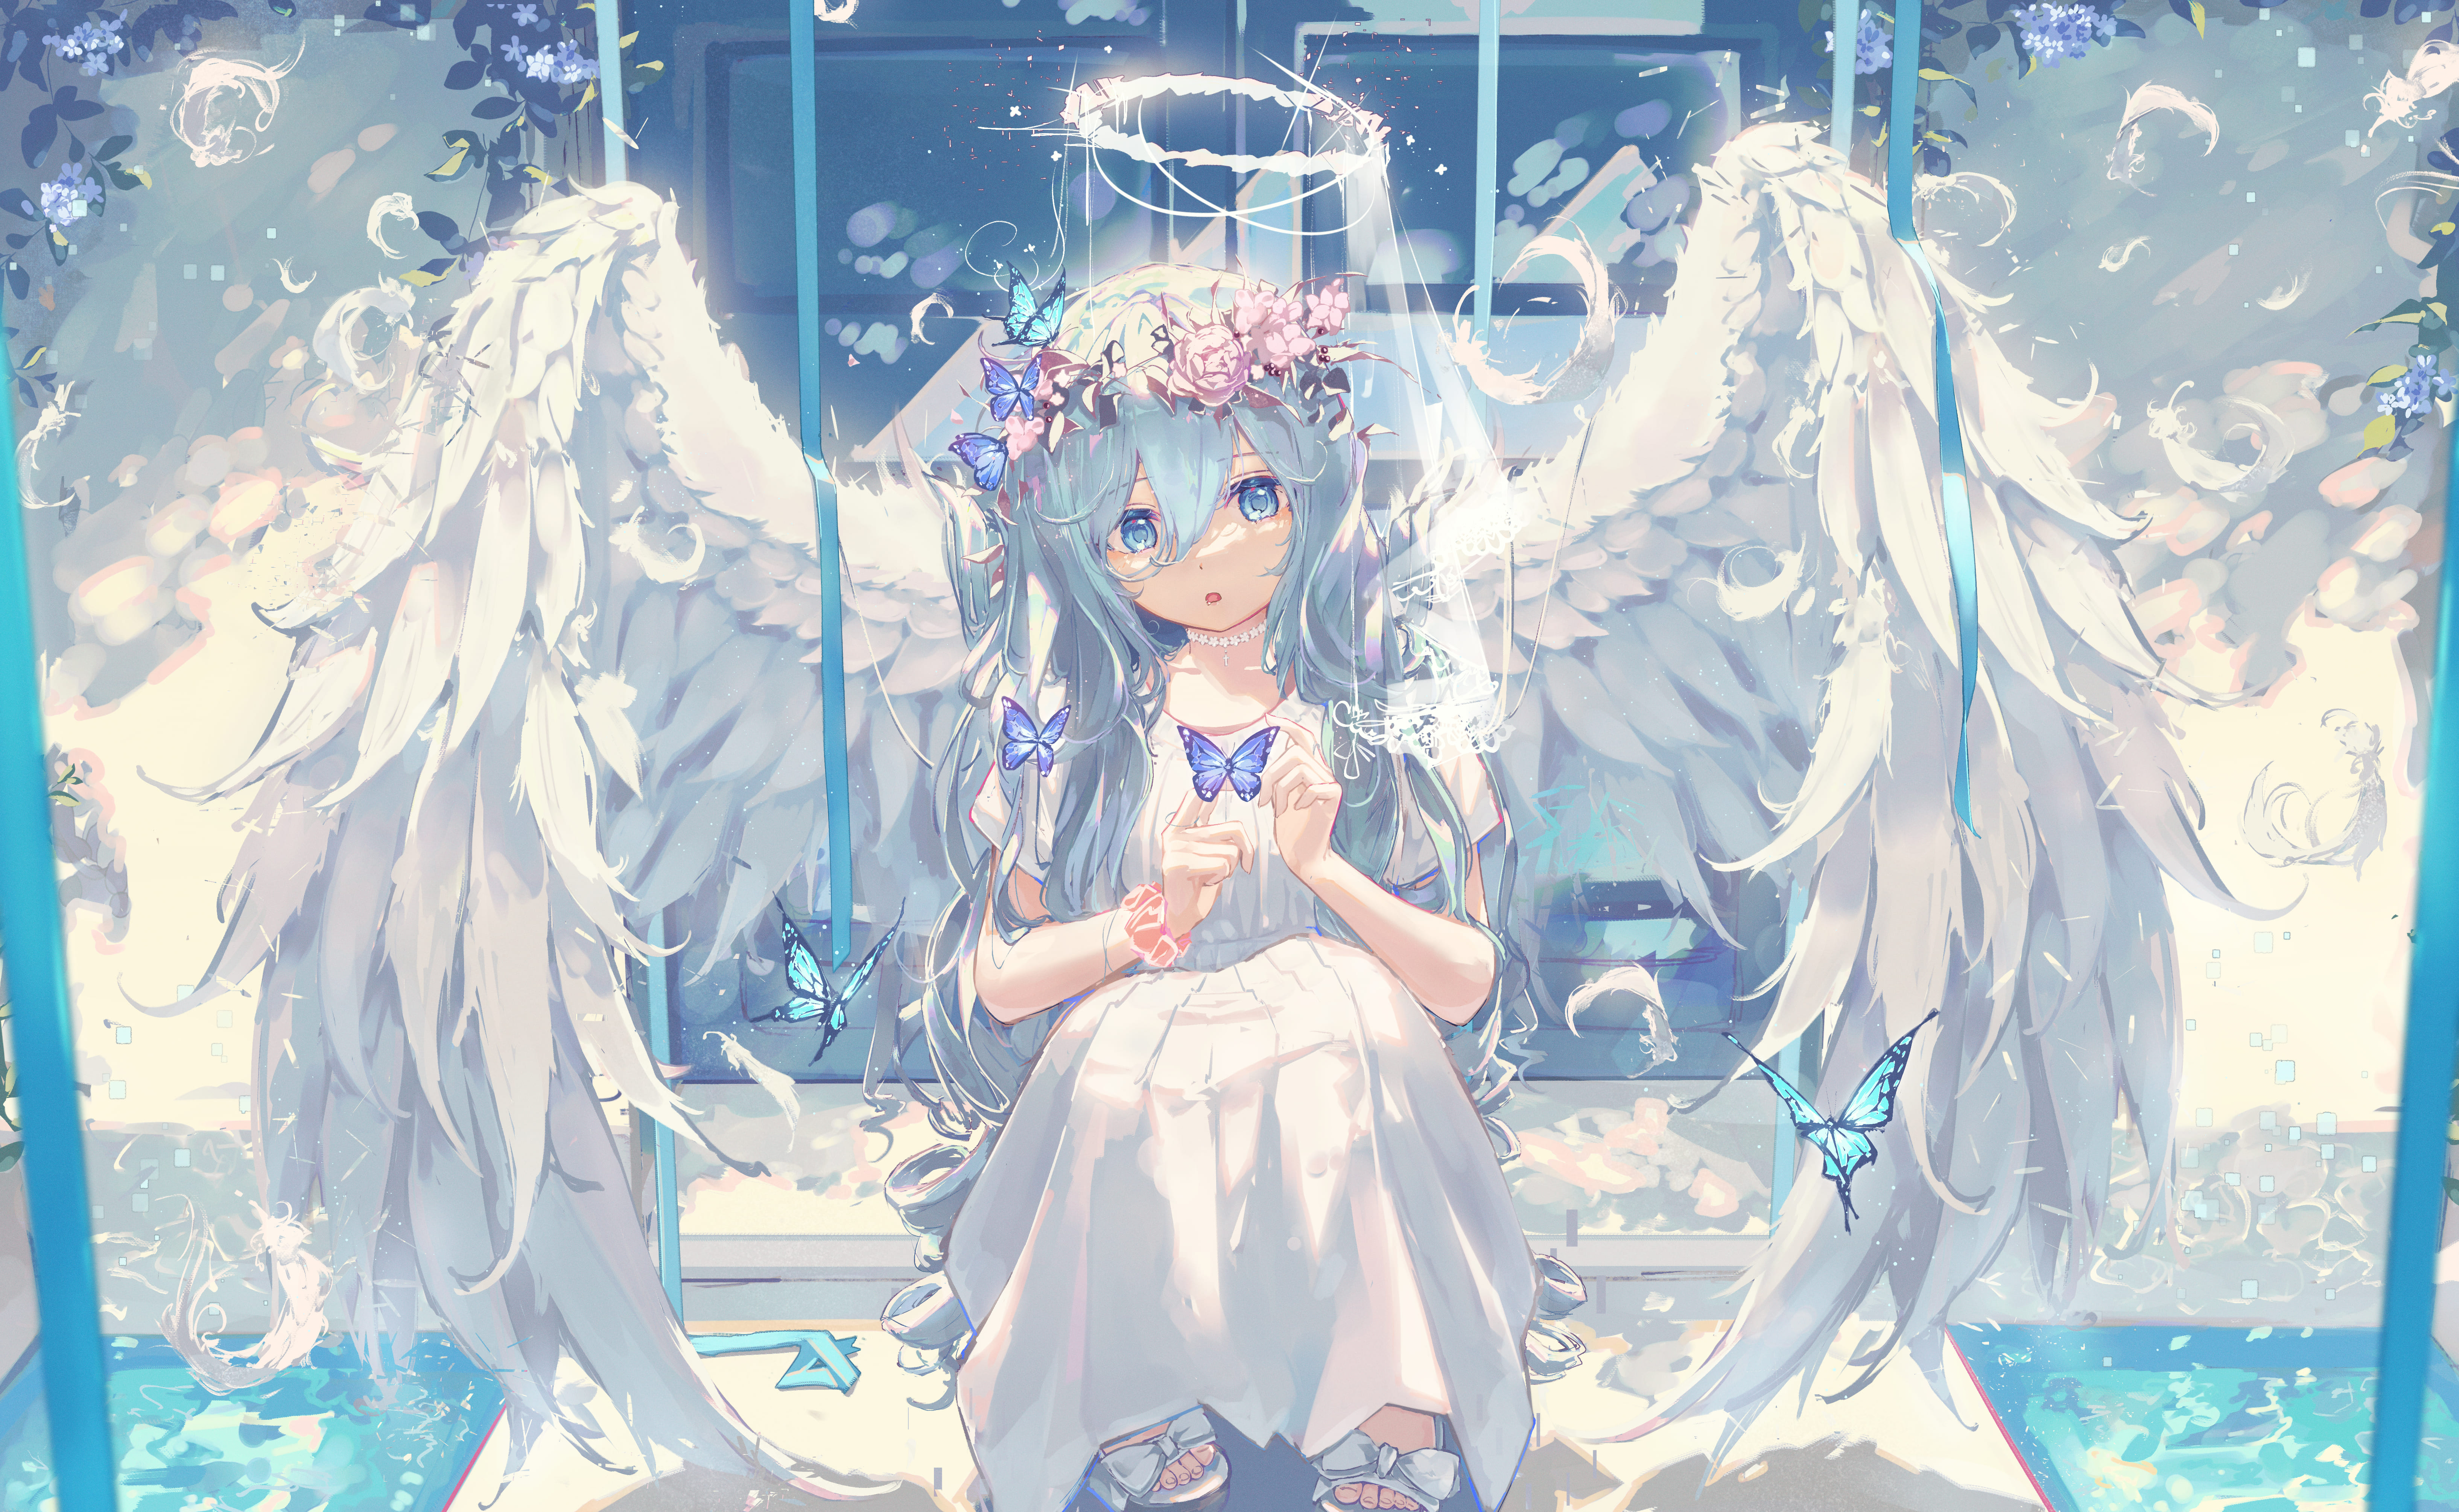 Anime 6535x4019 anime anime girls butterfly wings angel flower crown dress white dress sitting looking at viewer blue hair blue eyes artwork Fuunyon